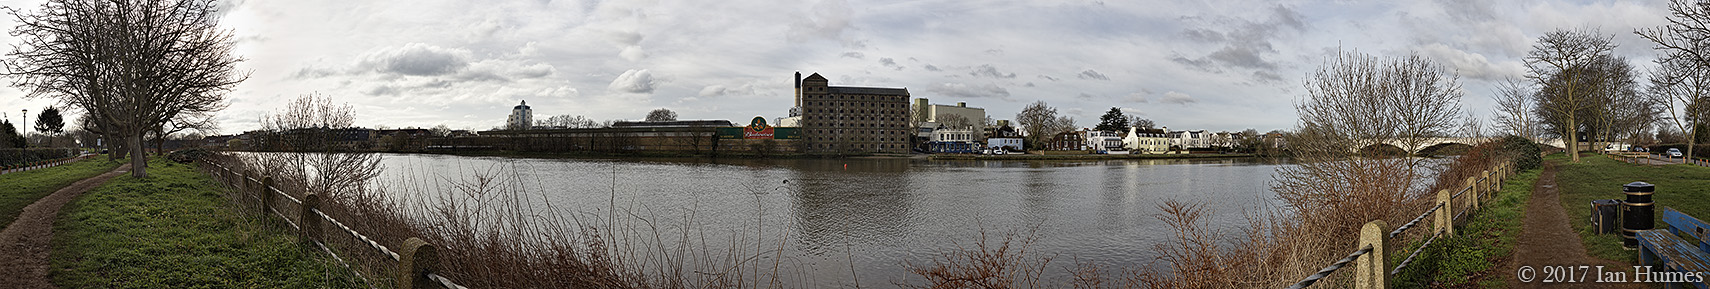 Stag Brewery Wharf - Mortlake